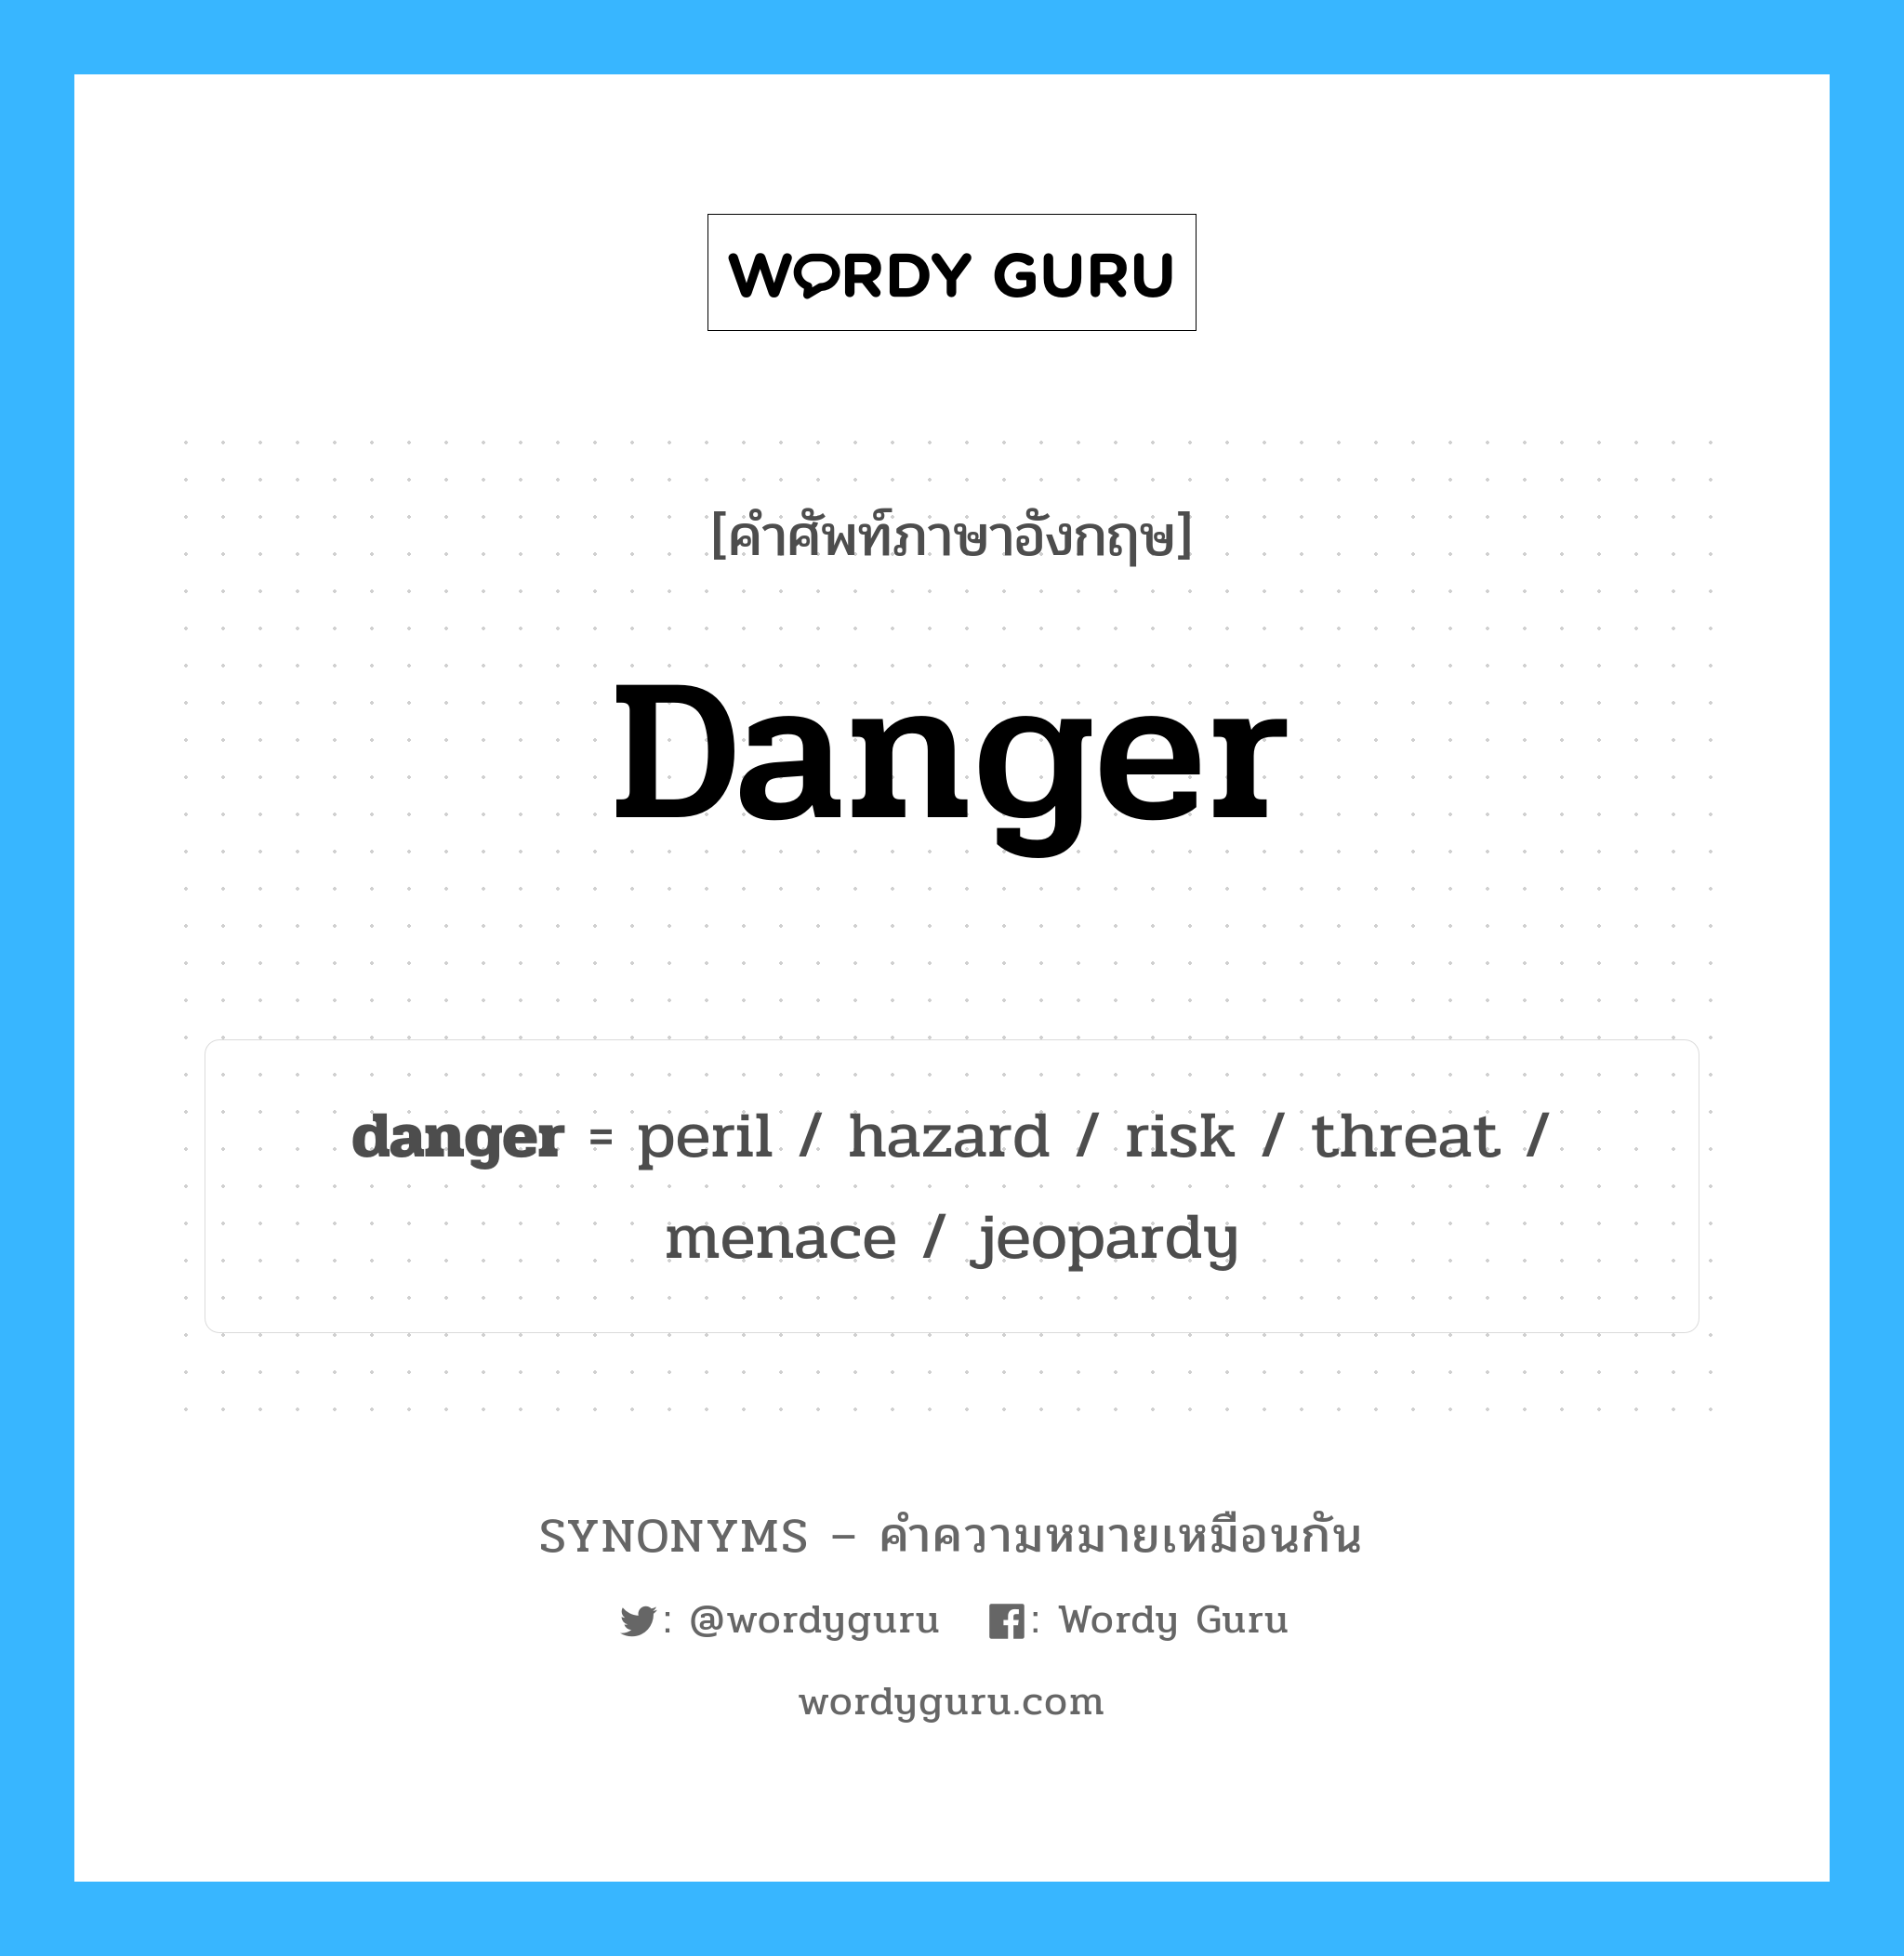 danger เป็นหนึ่งใน threat และมีคำอื่น ๆ อีกดังนี้, คำศัพท์ภาษาอังกฤษ danger ความหมายคล้ายกันกับ threat แปลว่า คุกคาม หมวด threat